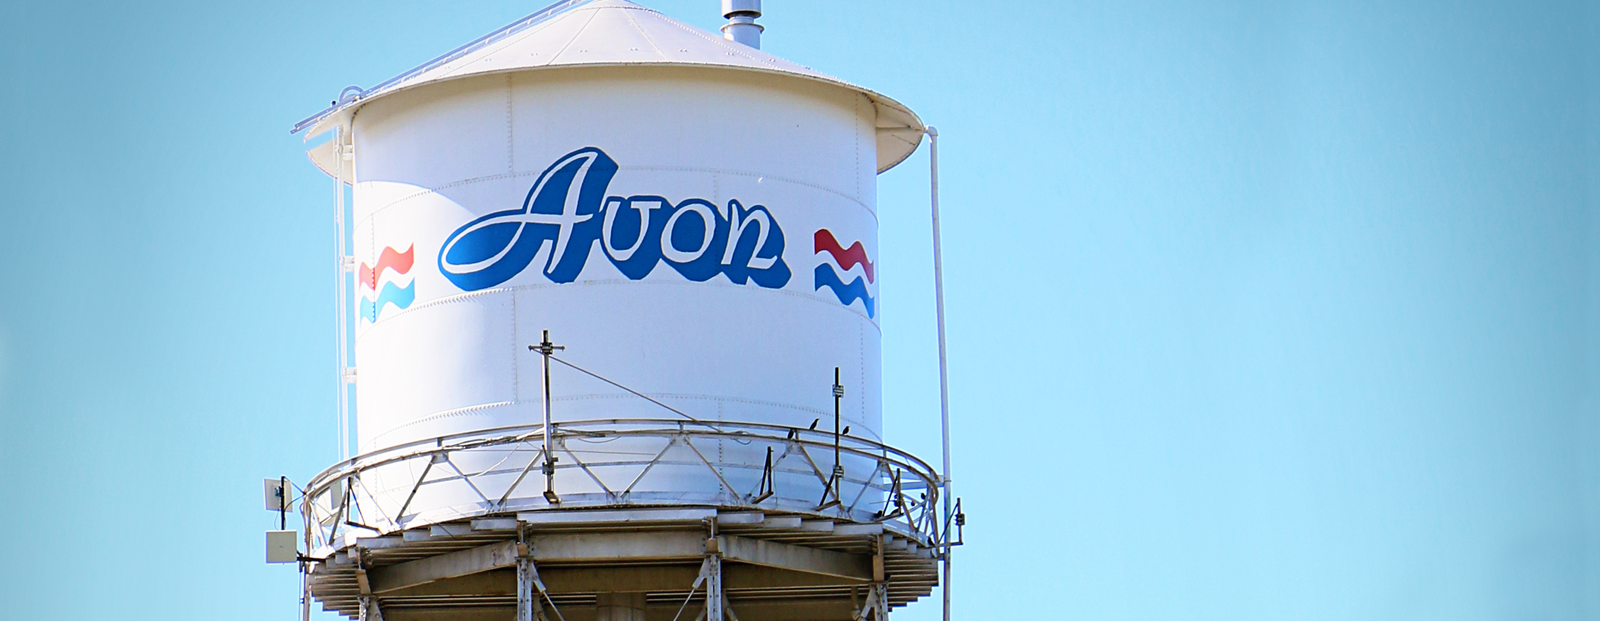 City of Avon South Dakota Water Tower